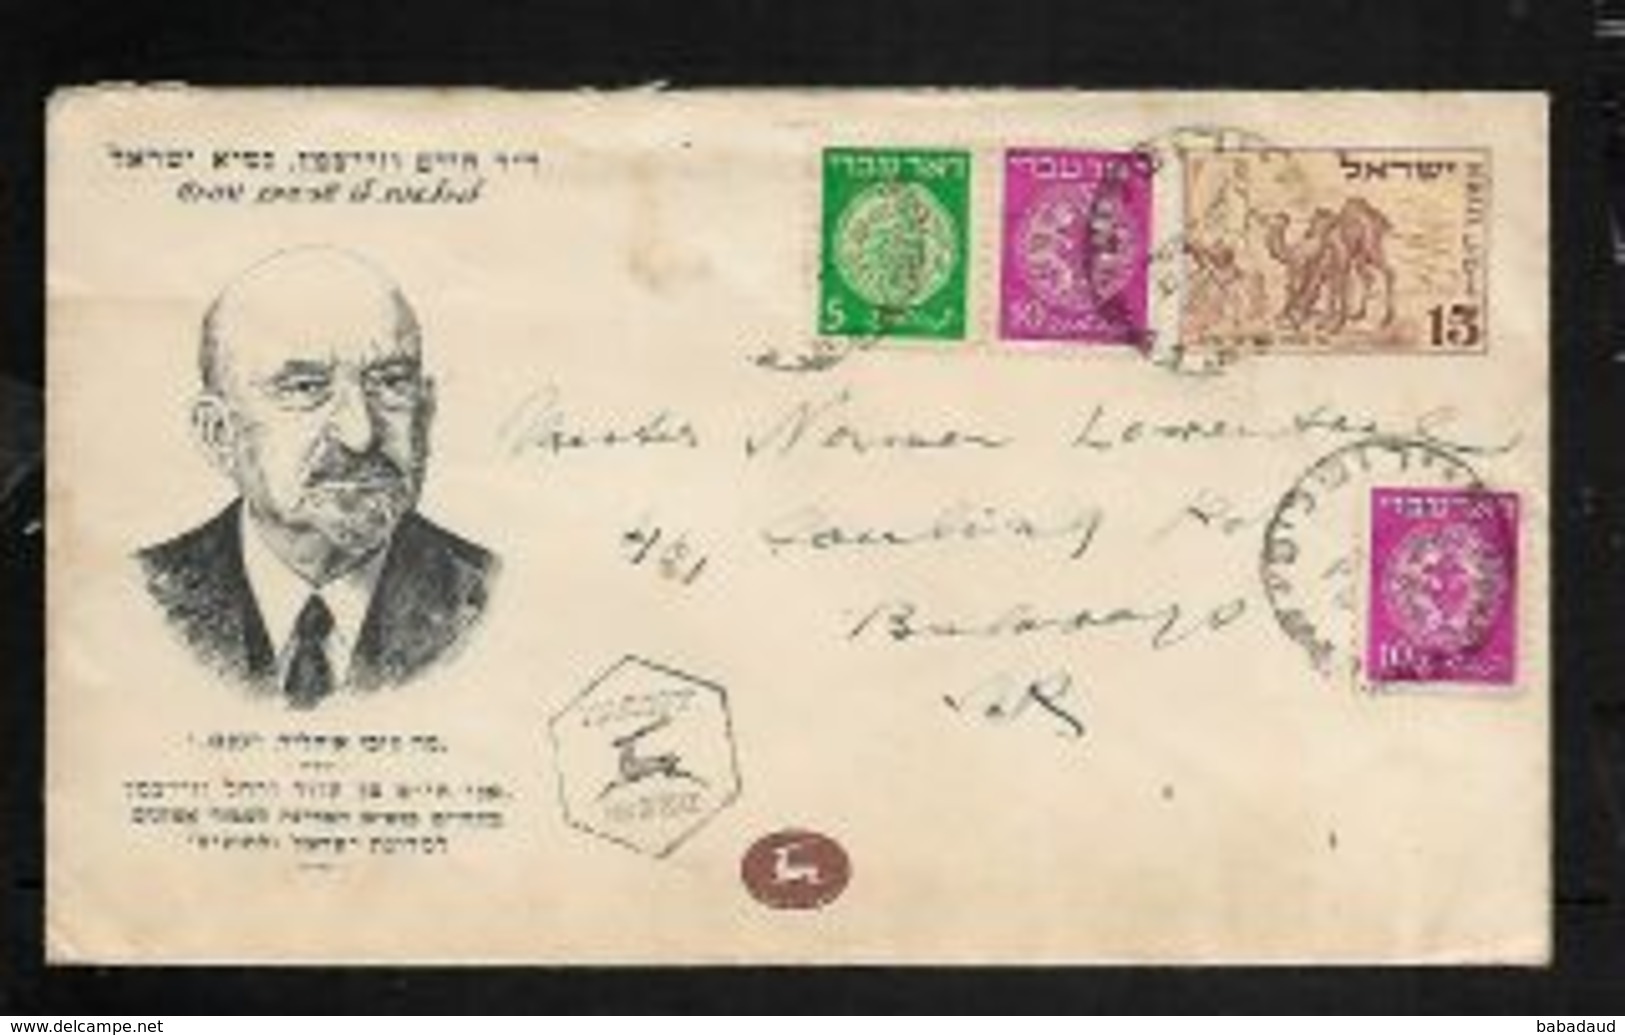 Israel -Chaim Weissman Birthday, 15p Negev Envelope & Adhesives 27.11.49   > Bulawayo S.Rhodesia. - FDC